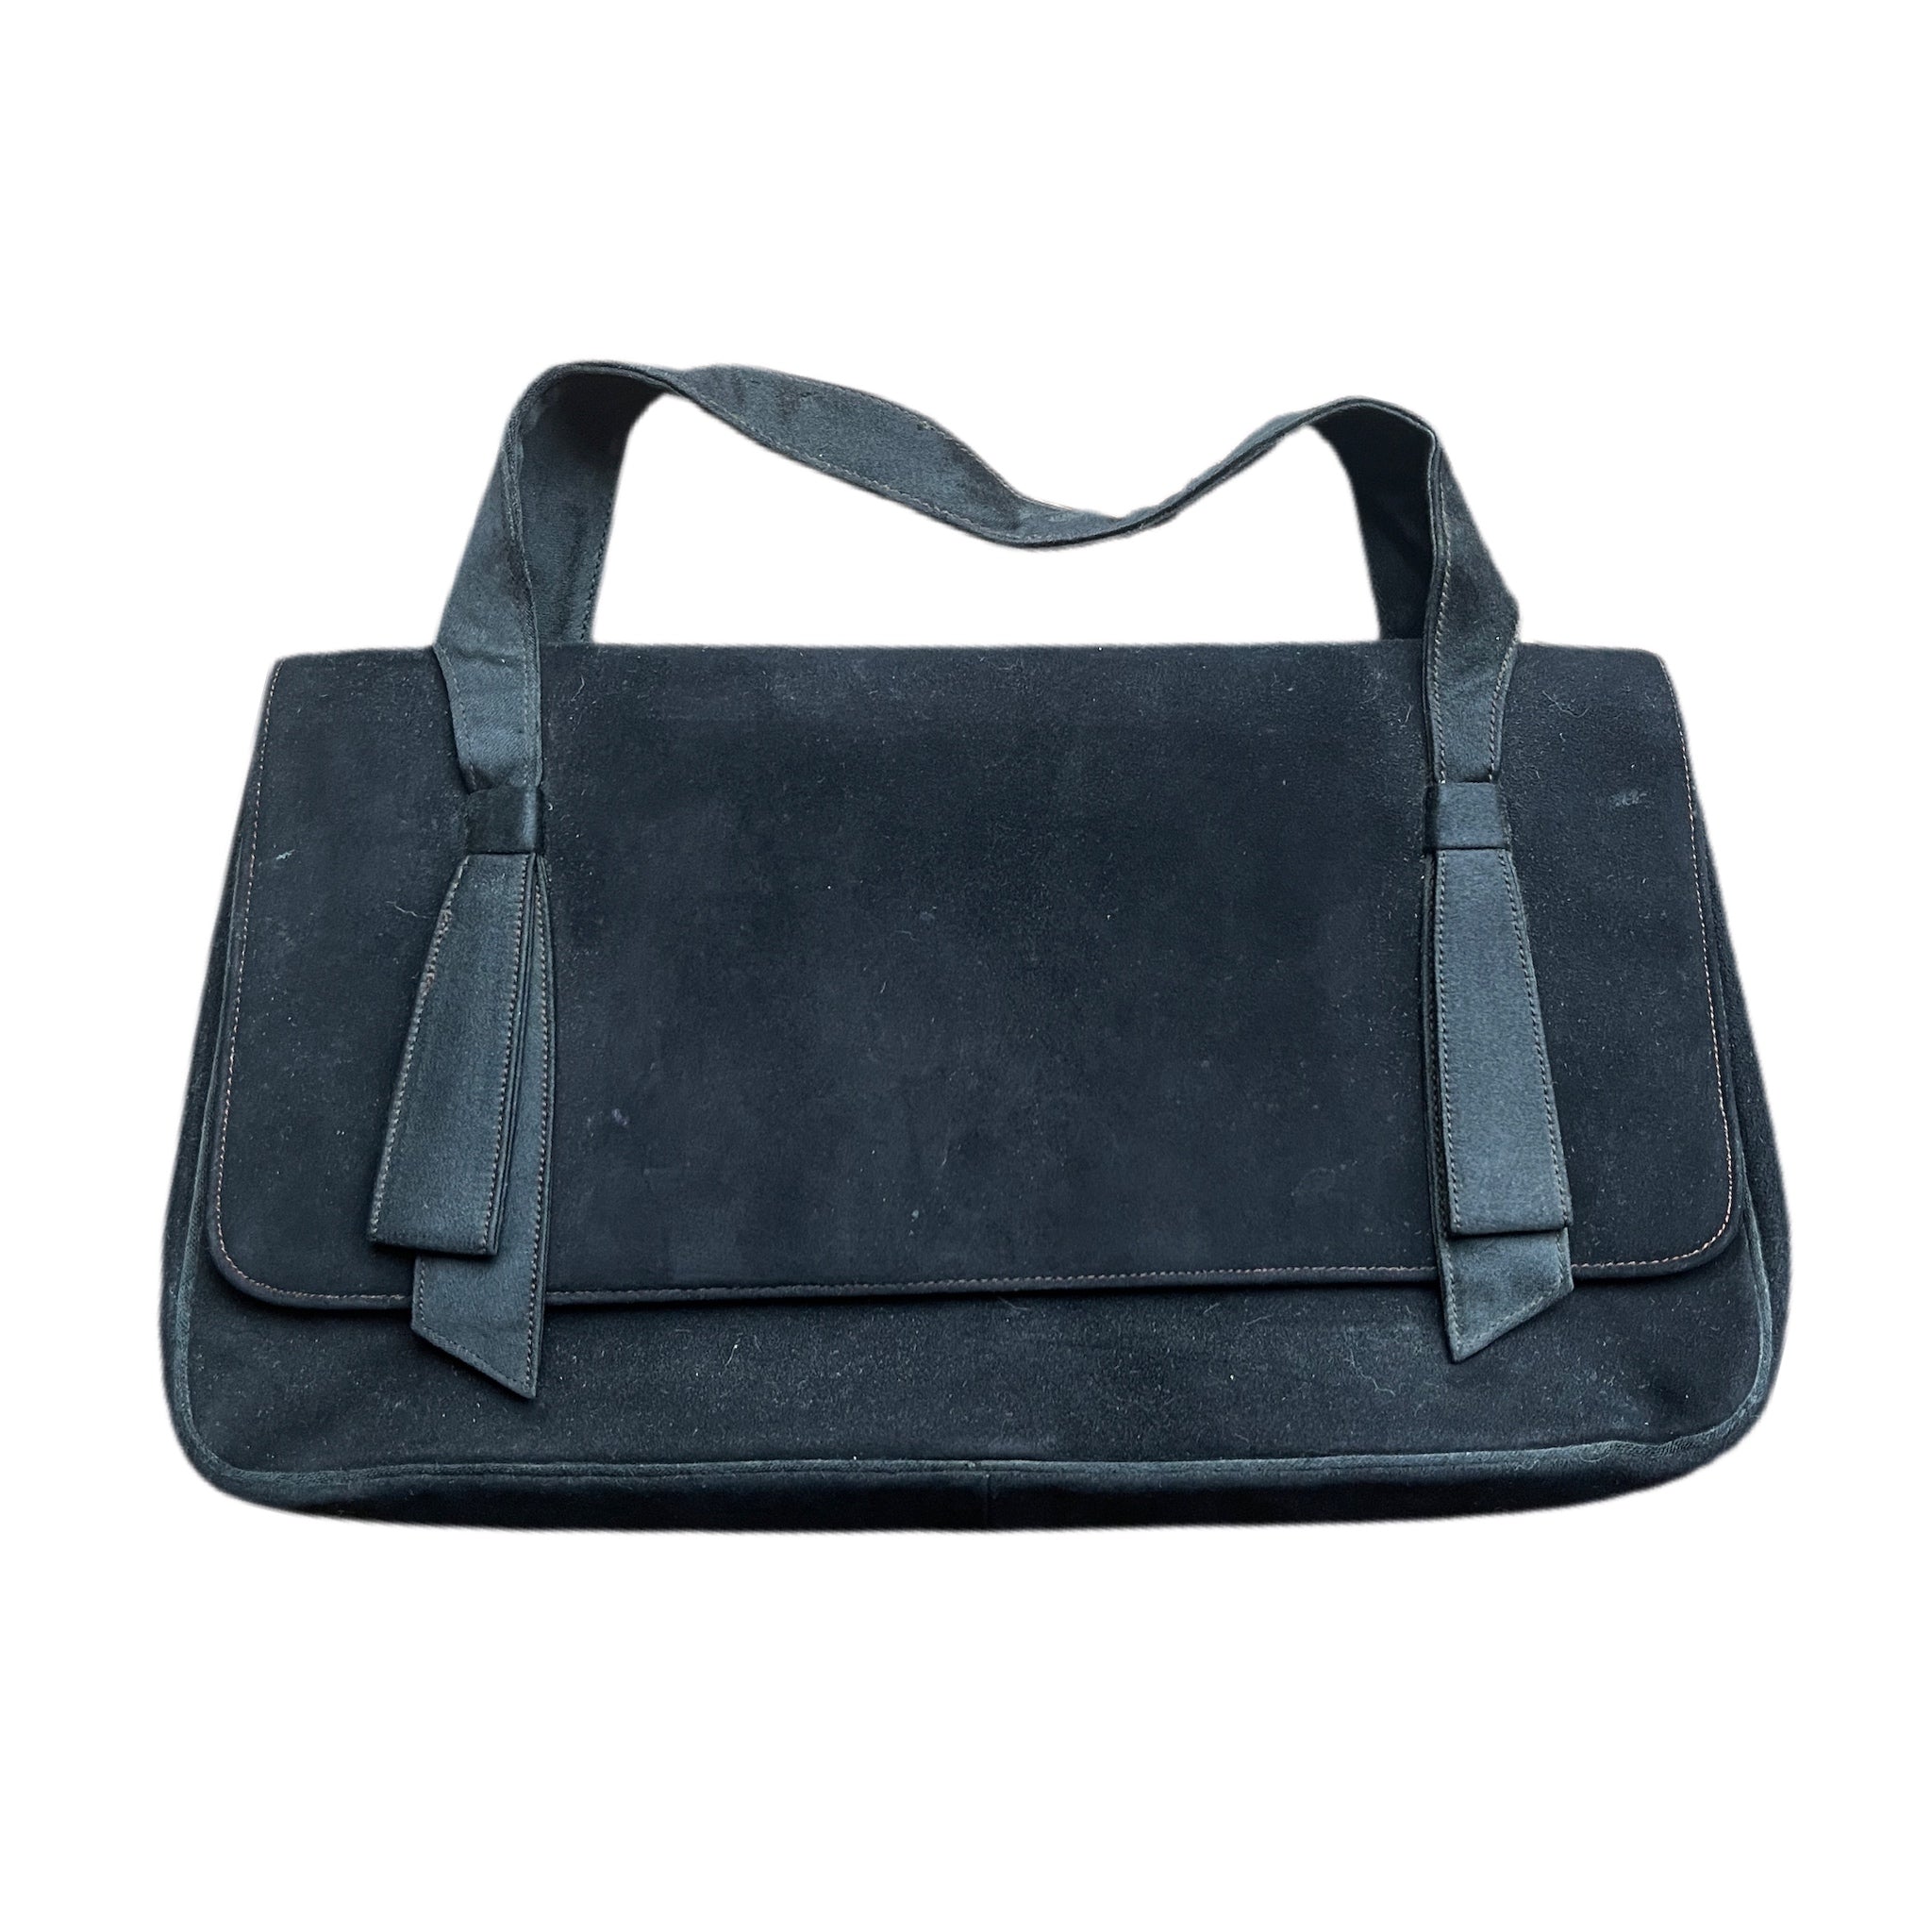 Cute little black H&M purse with chain! This purse... - Depop